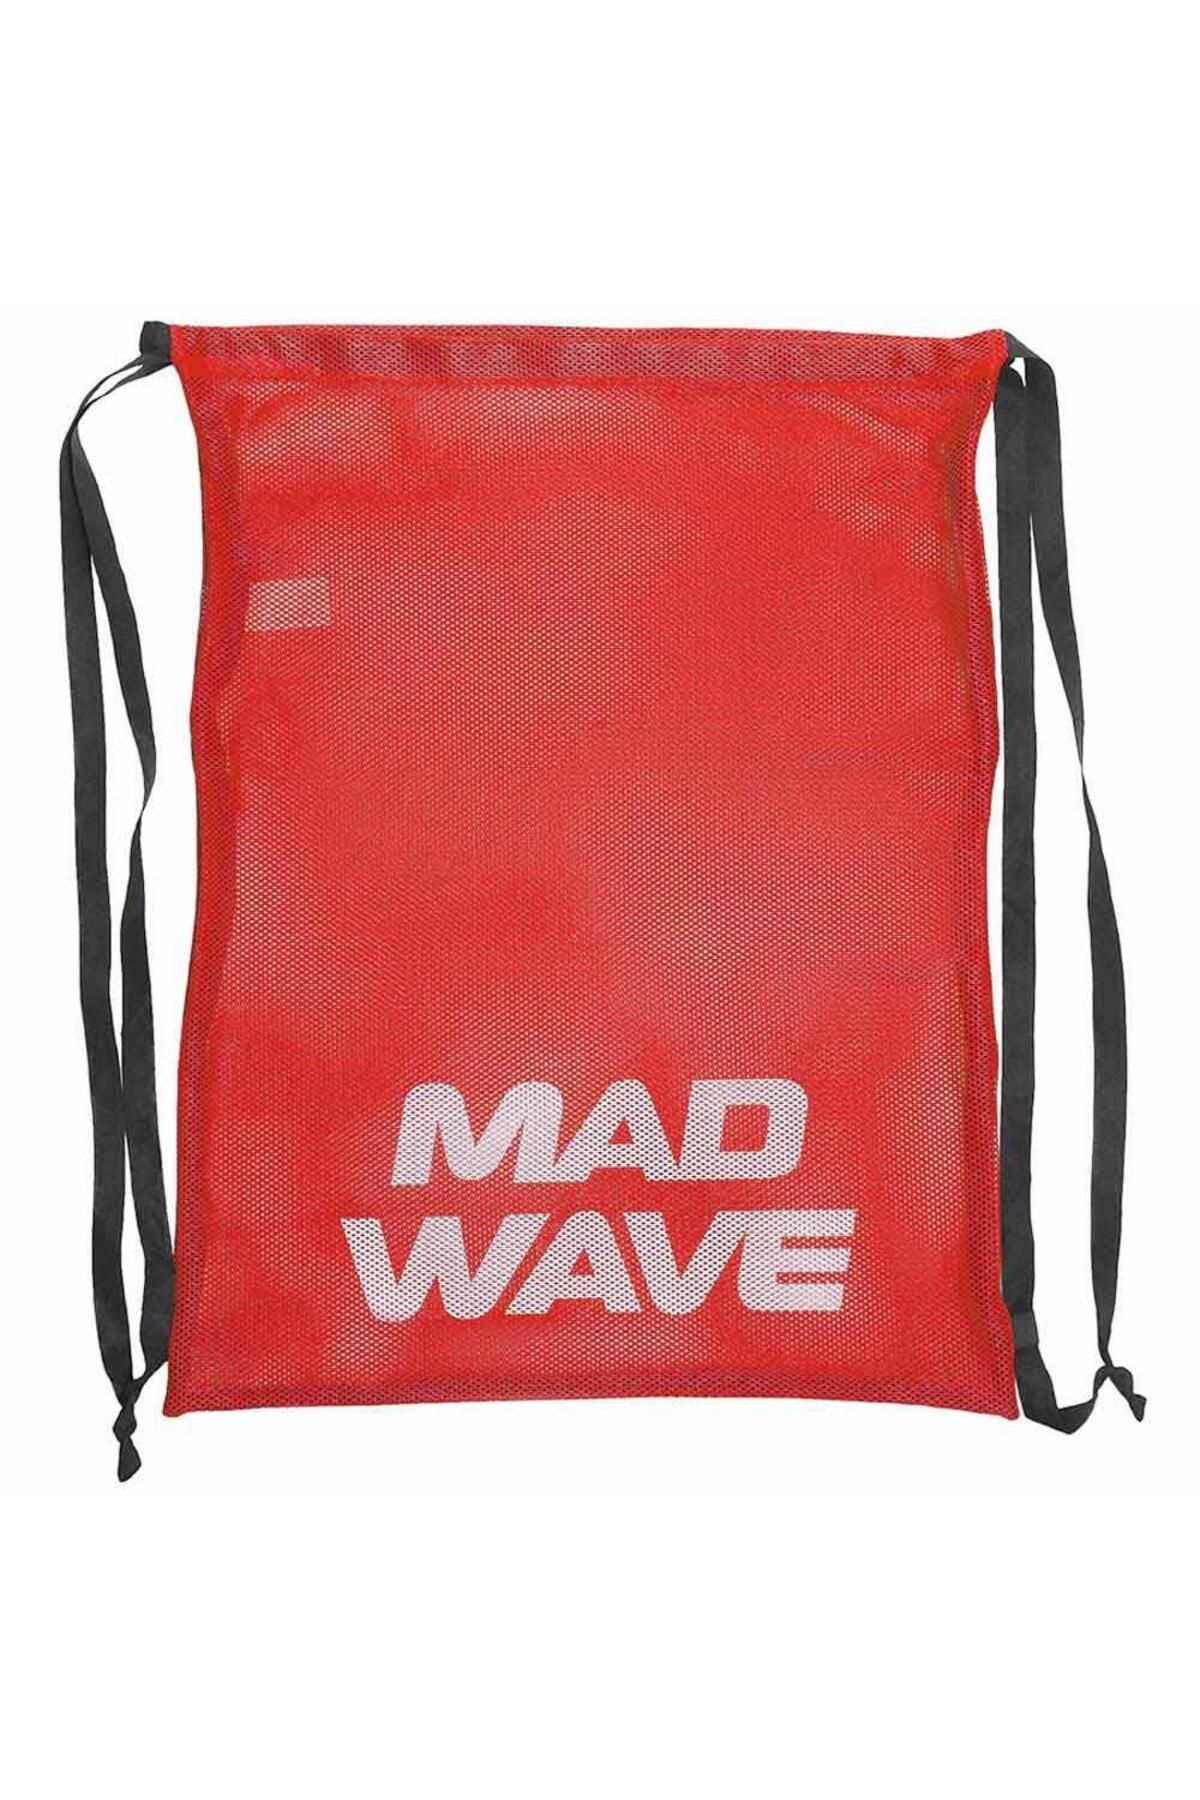 Mad Wave DRY MESH ÇANTA M1118 01 0 05W